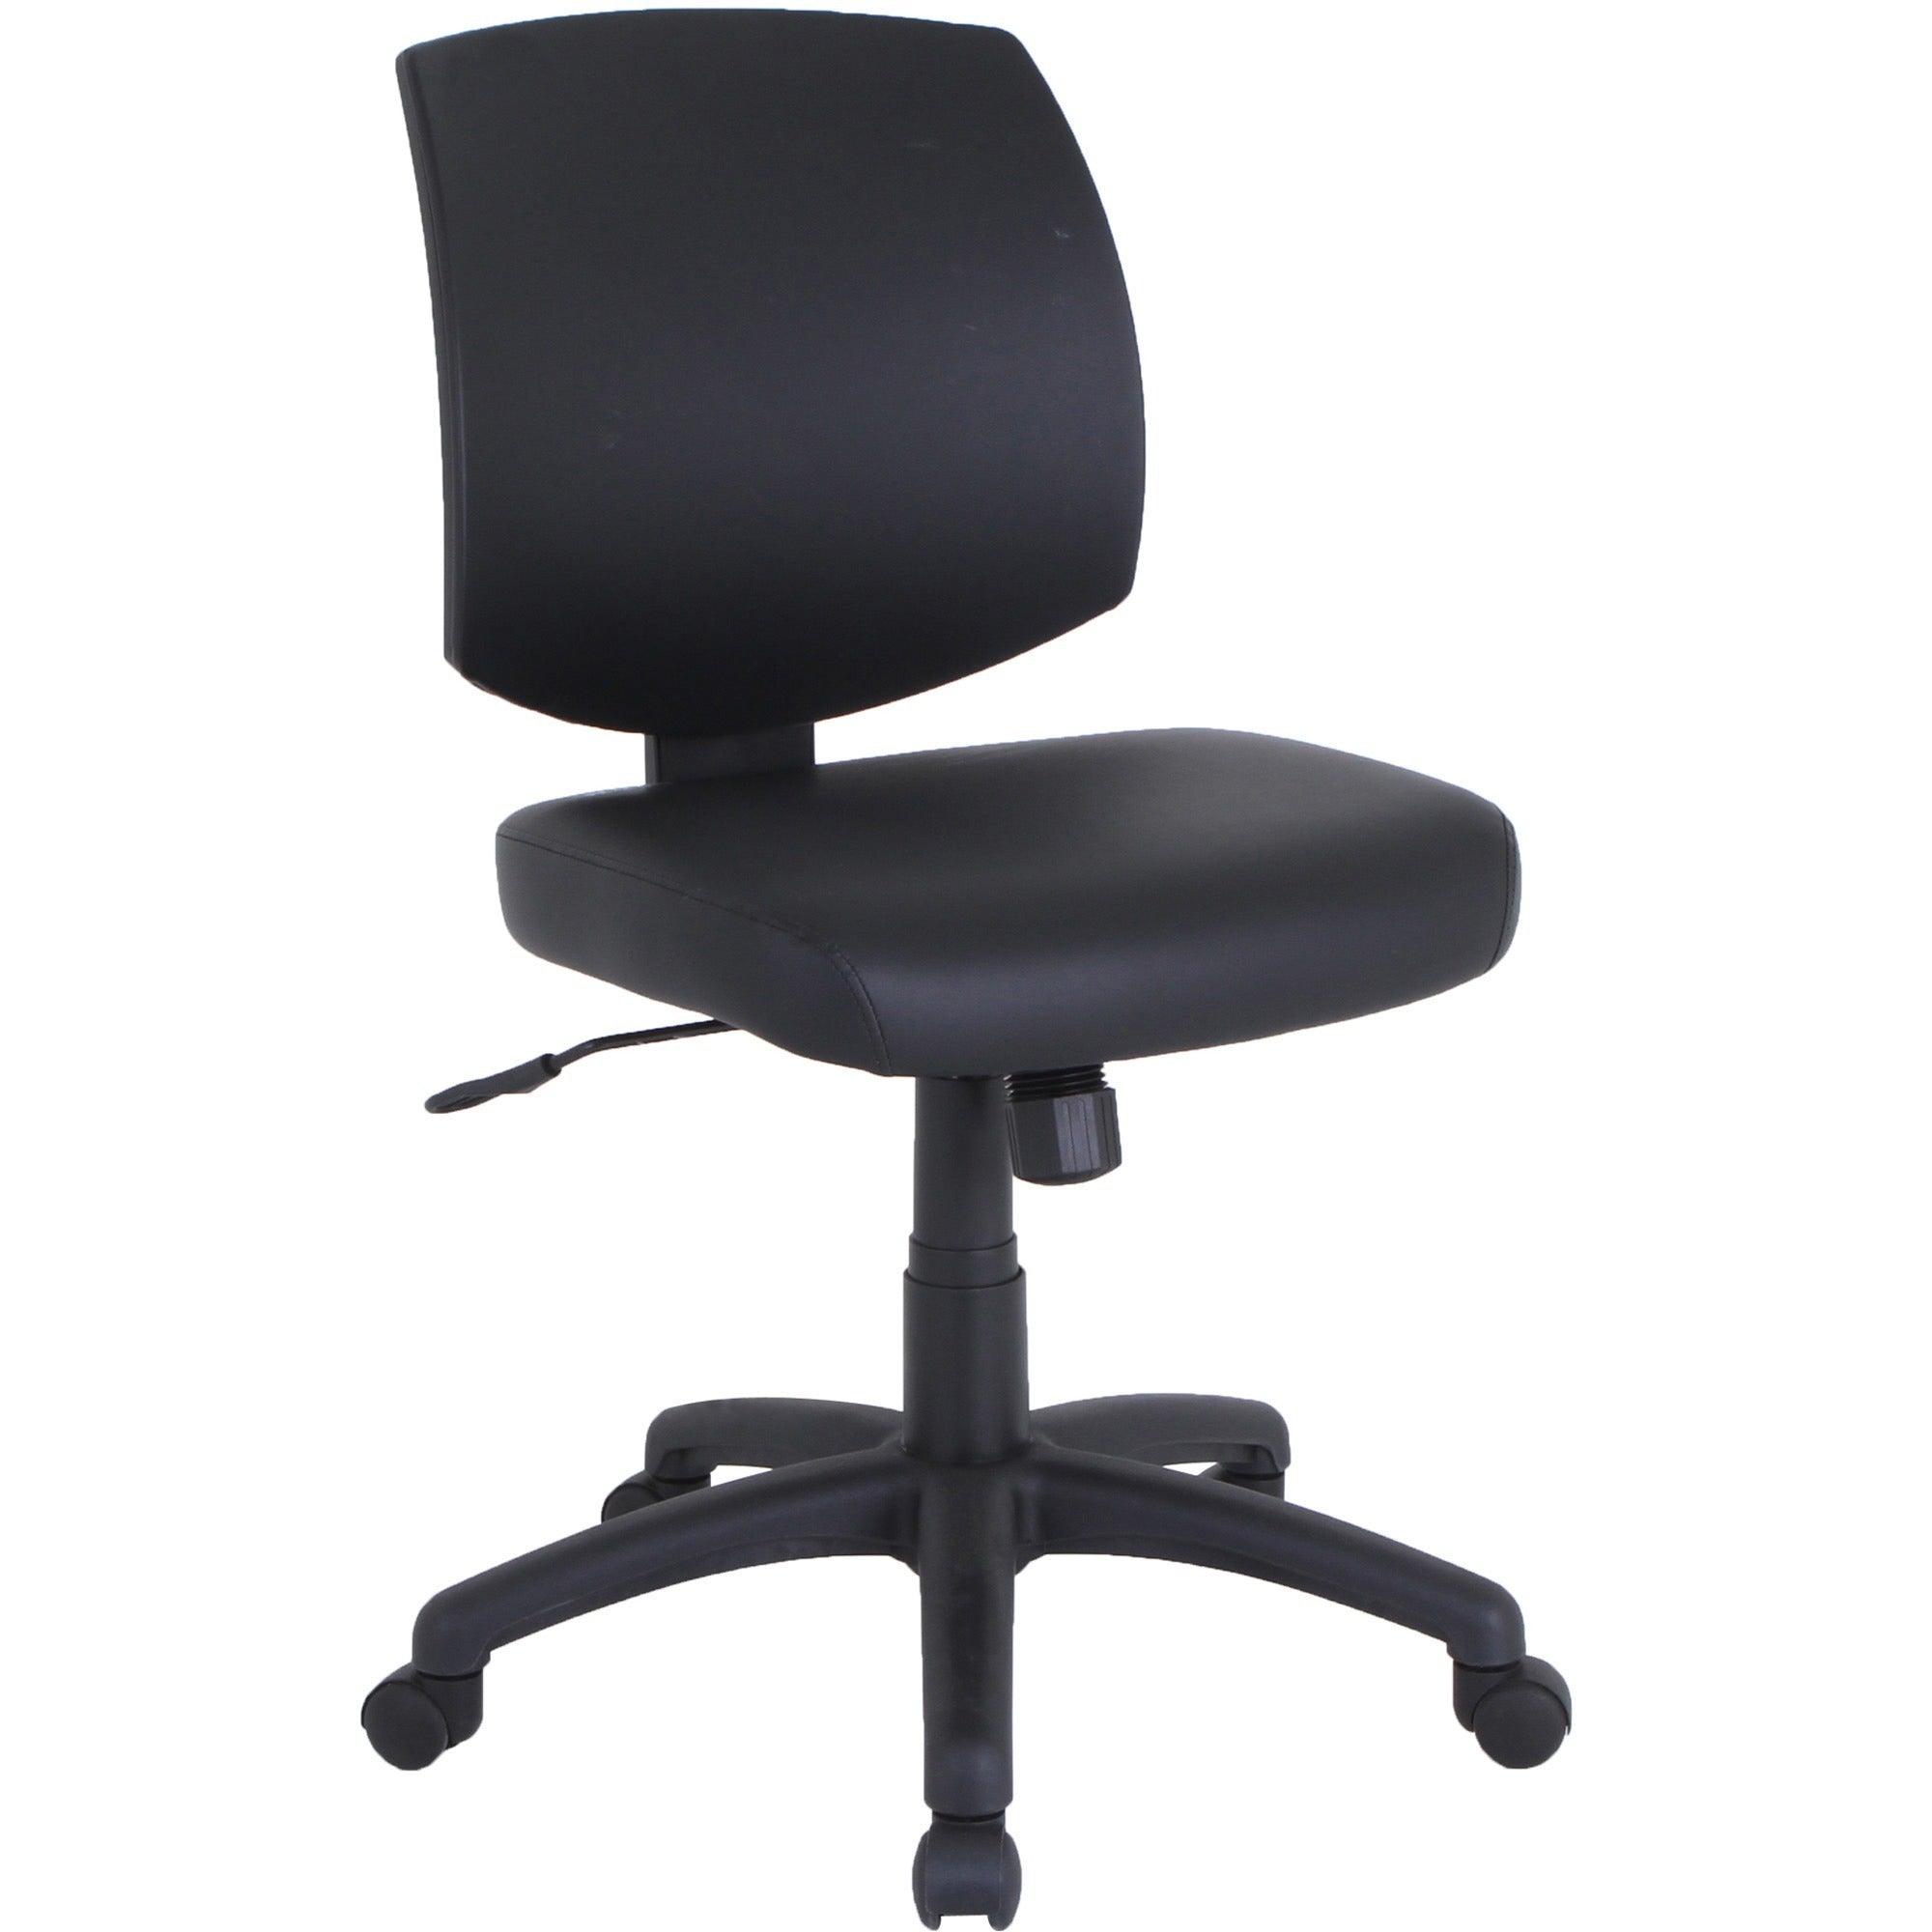 lorell-task-chair-polyvinyl-chloride-pvc-seat-polyvinyl-chloride-pvc-back-5-star-base-black-1-each_llr84877 - 1